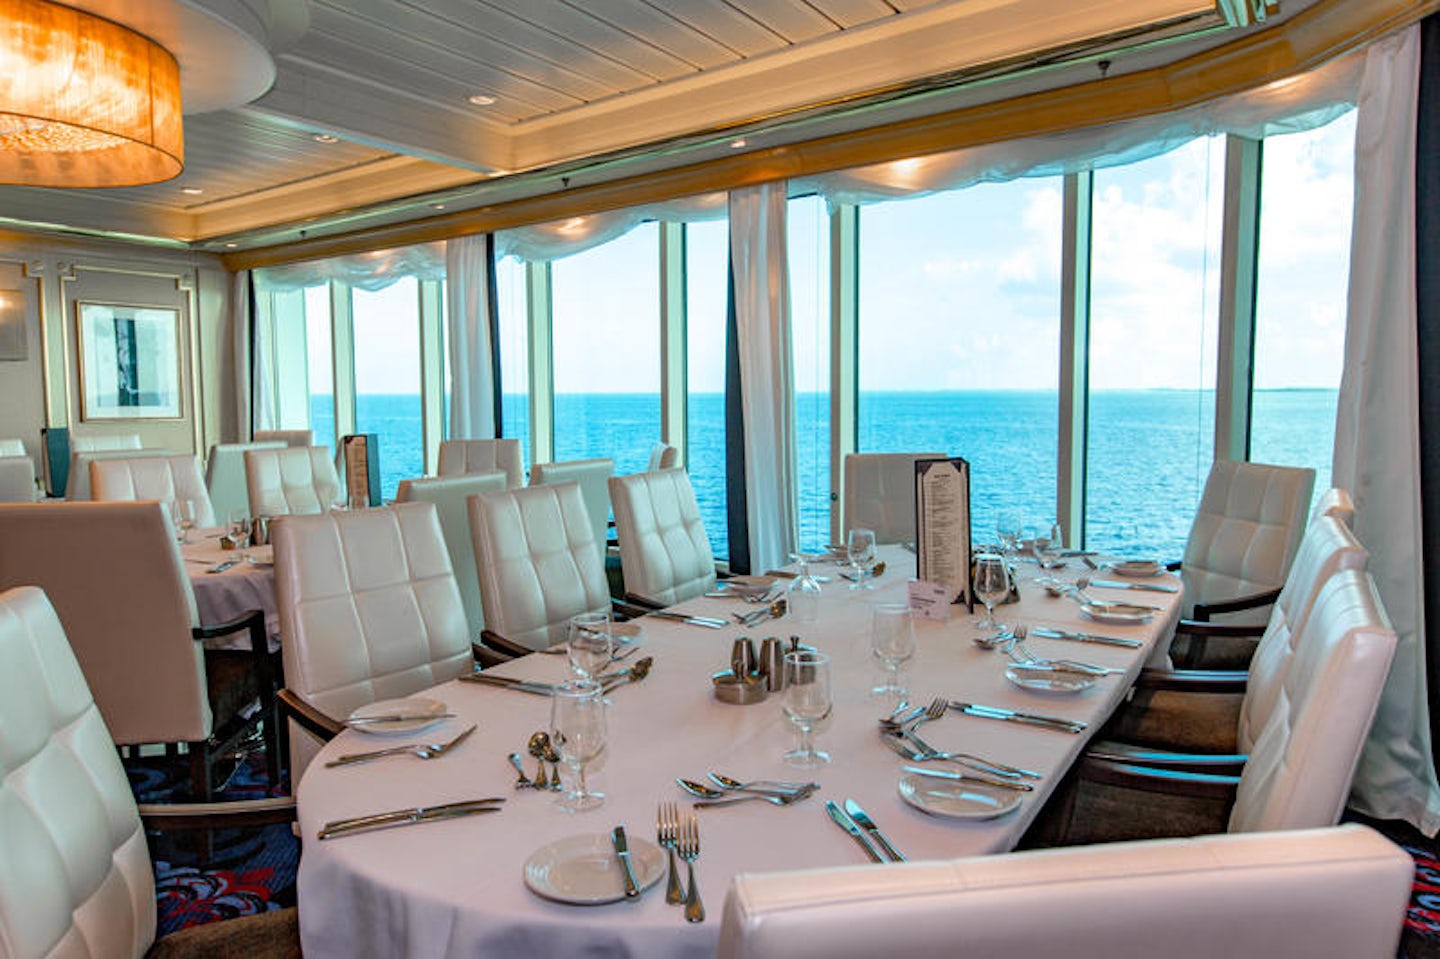 Main Dining Room on Mariner of the Seas